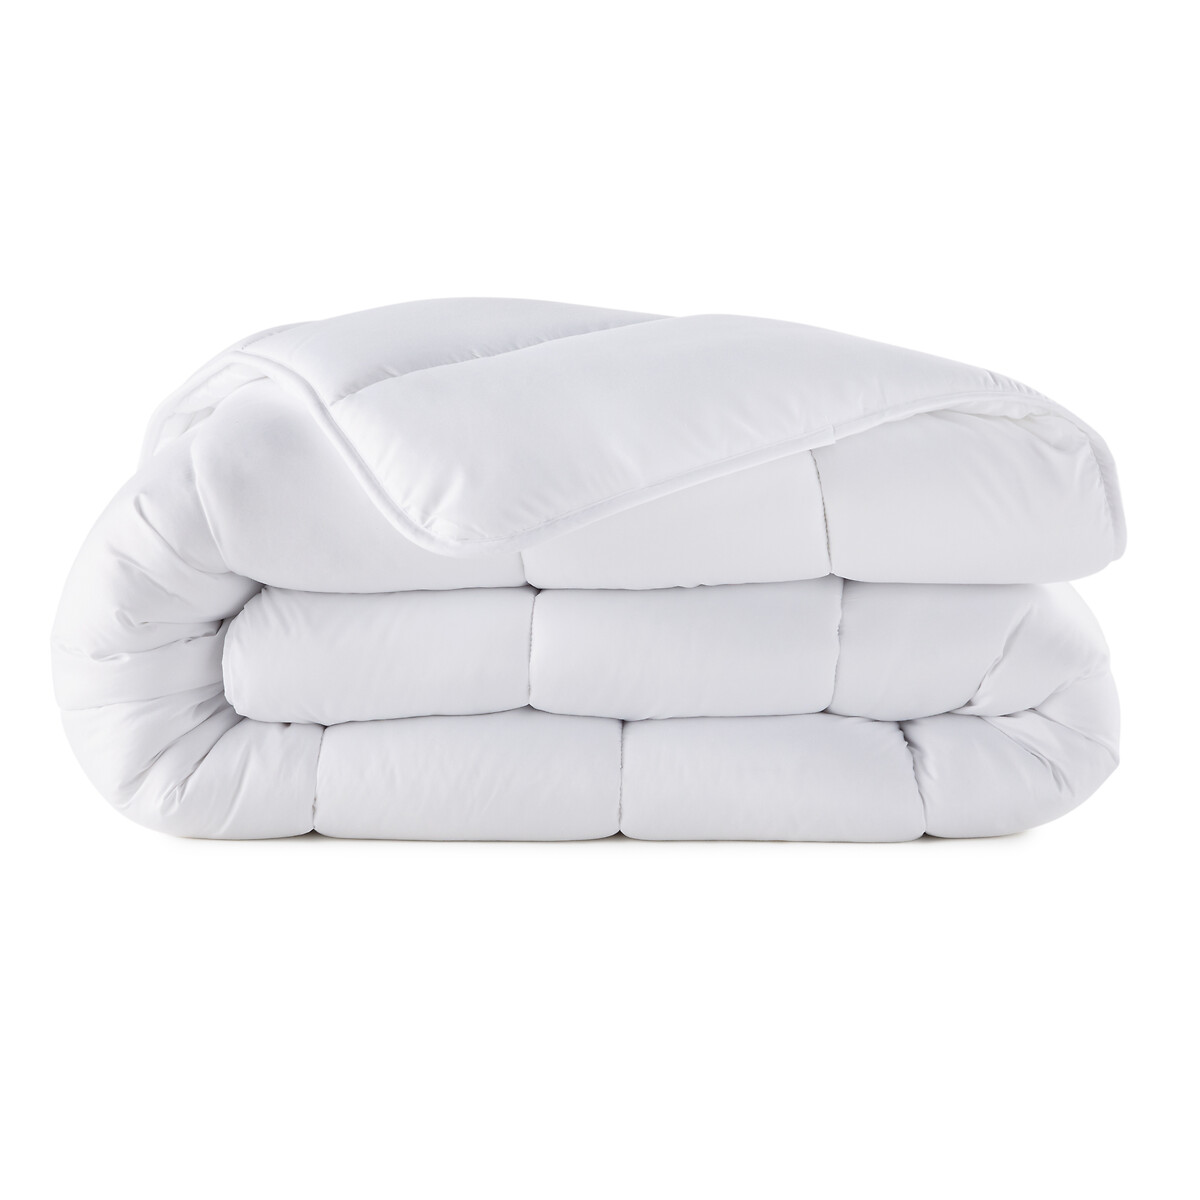 Одеяло La Redoute С обработкой  гм 140 x 200 см белый, размер 140 x 200 см - фото 2